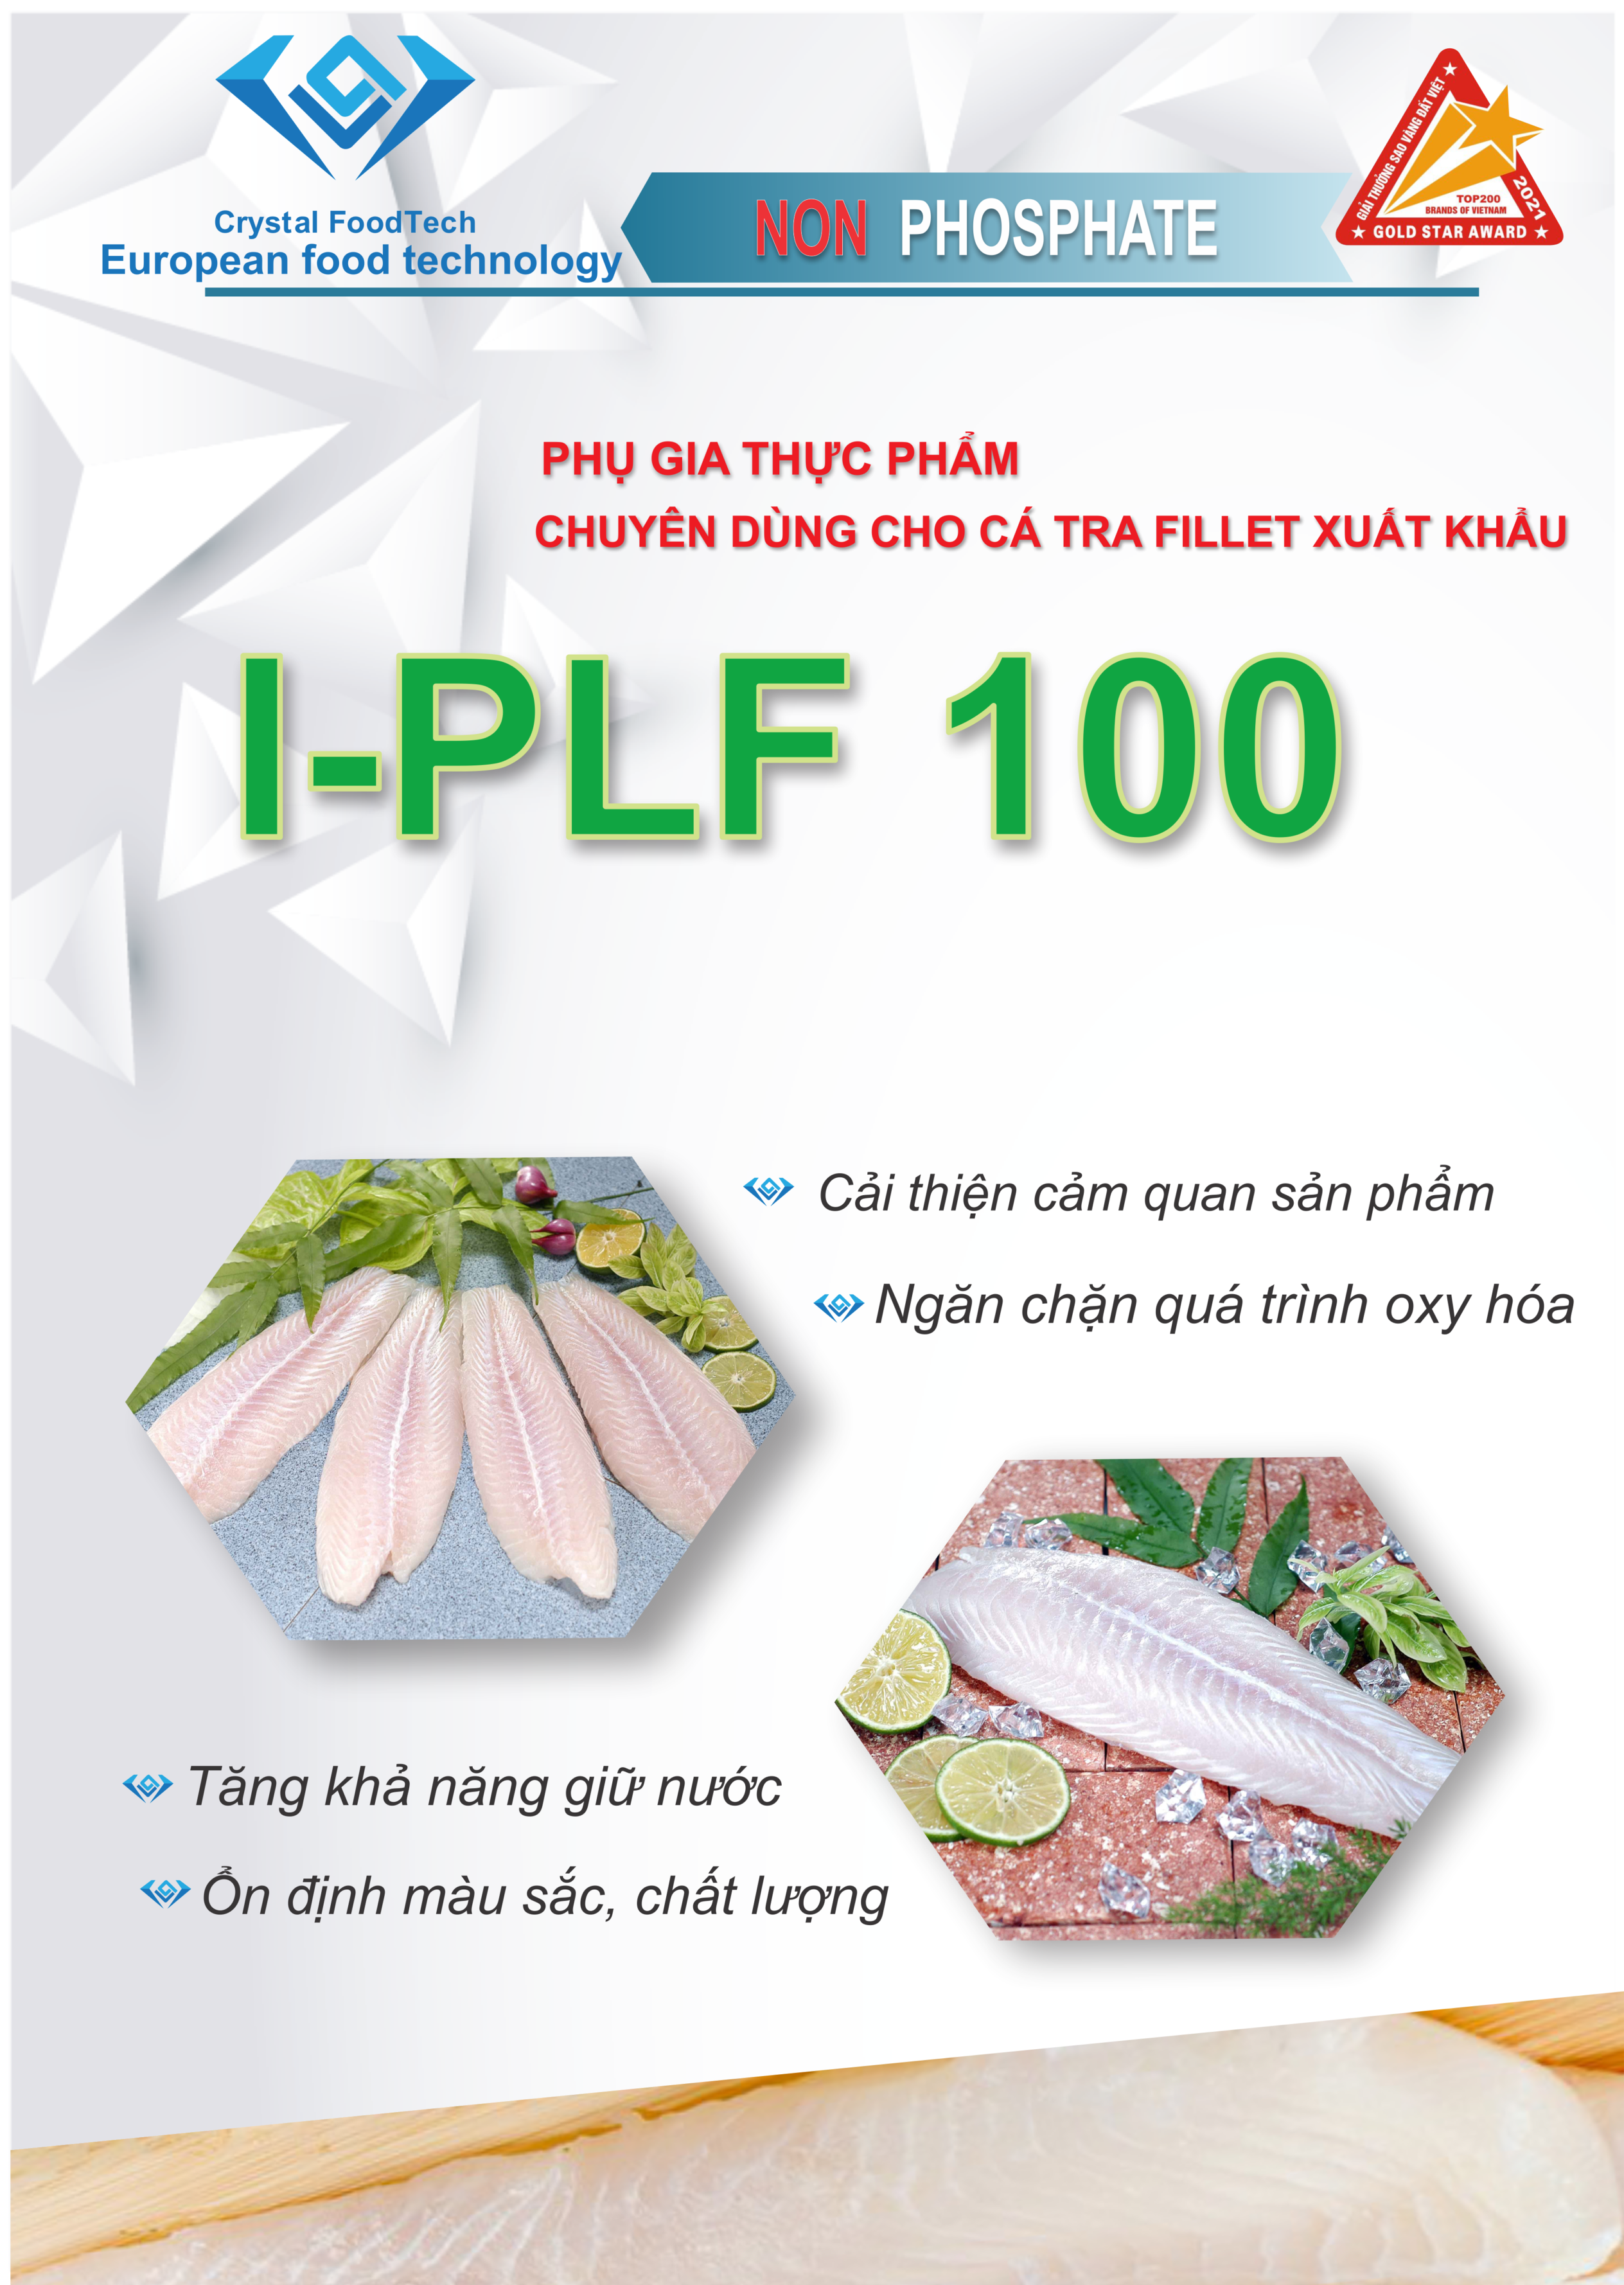 I - PLF 100